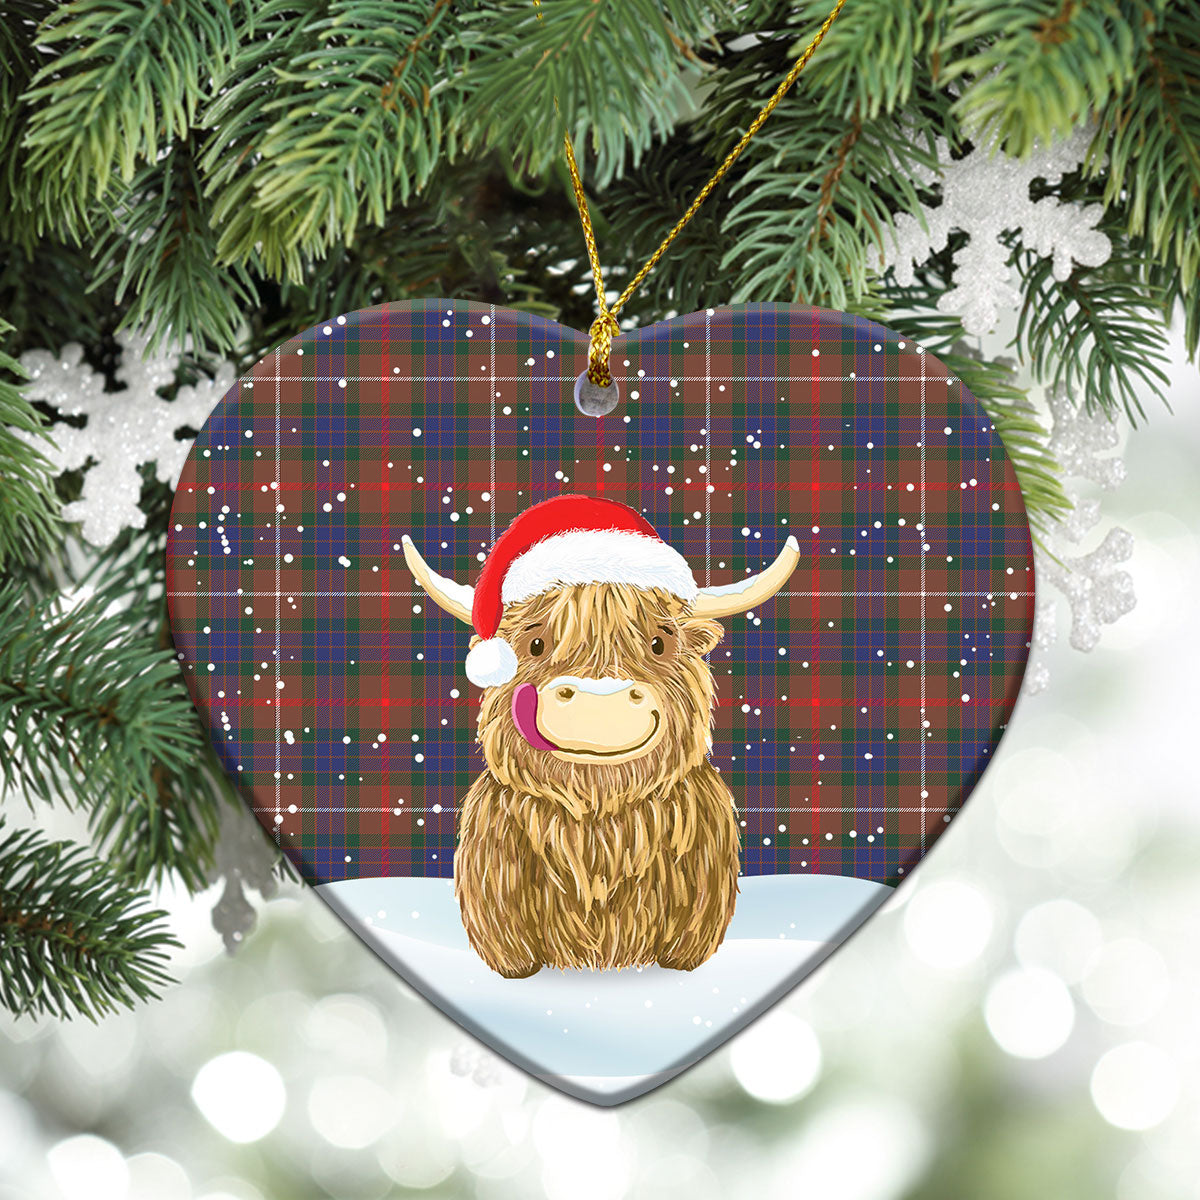 Fraser (of Lovat) Hunting Modern Tartan Christmas Ceramic Ornament - Highland Cows Style